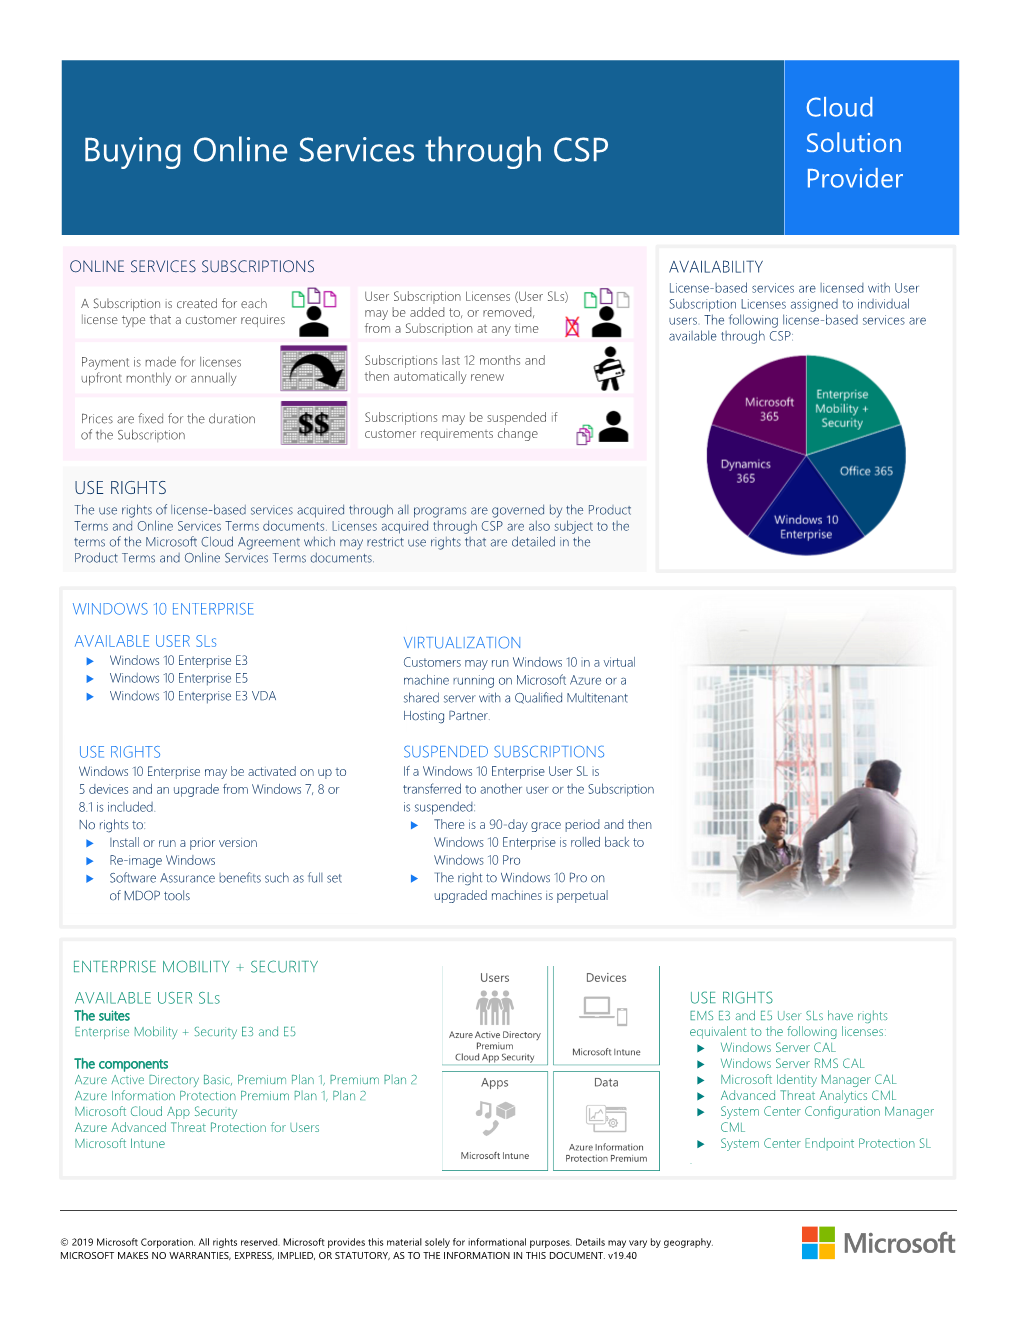 Buying Online Services Through CSP Solution